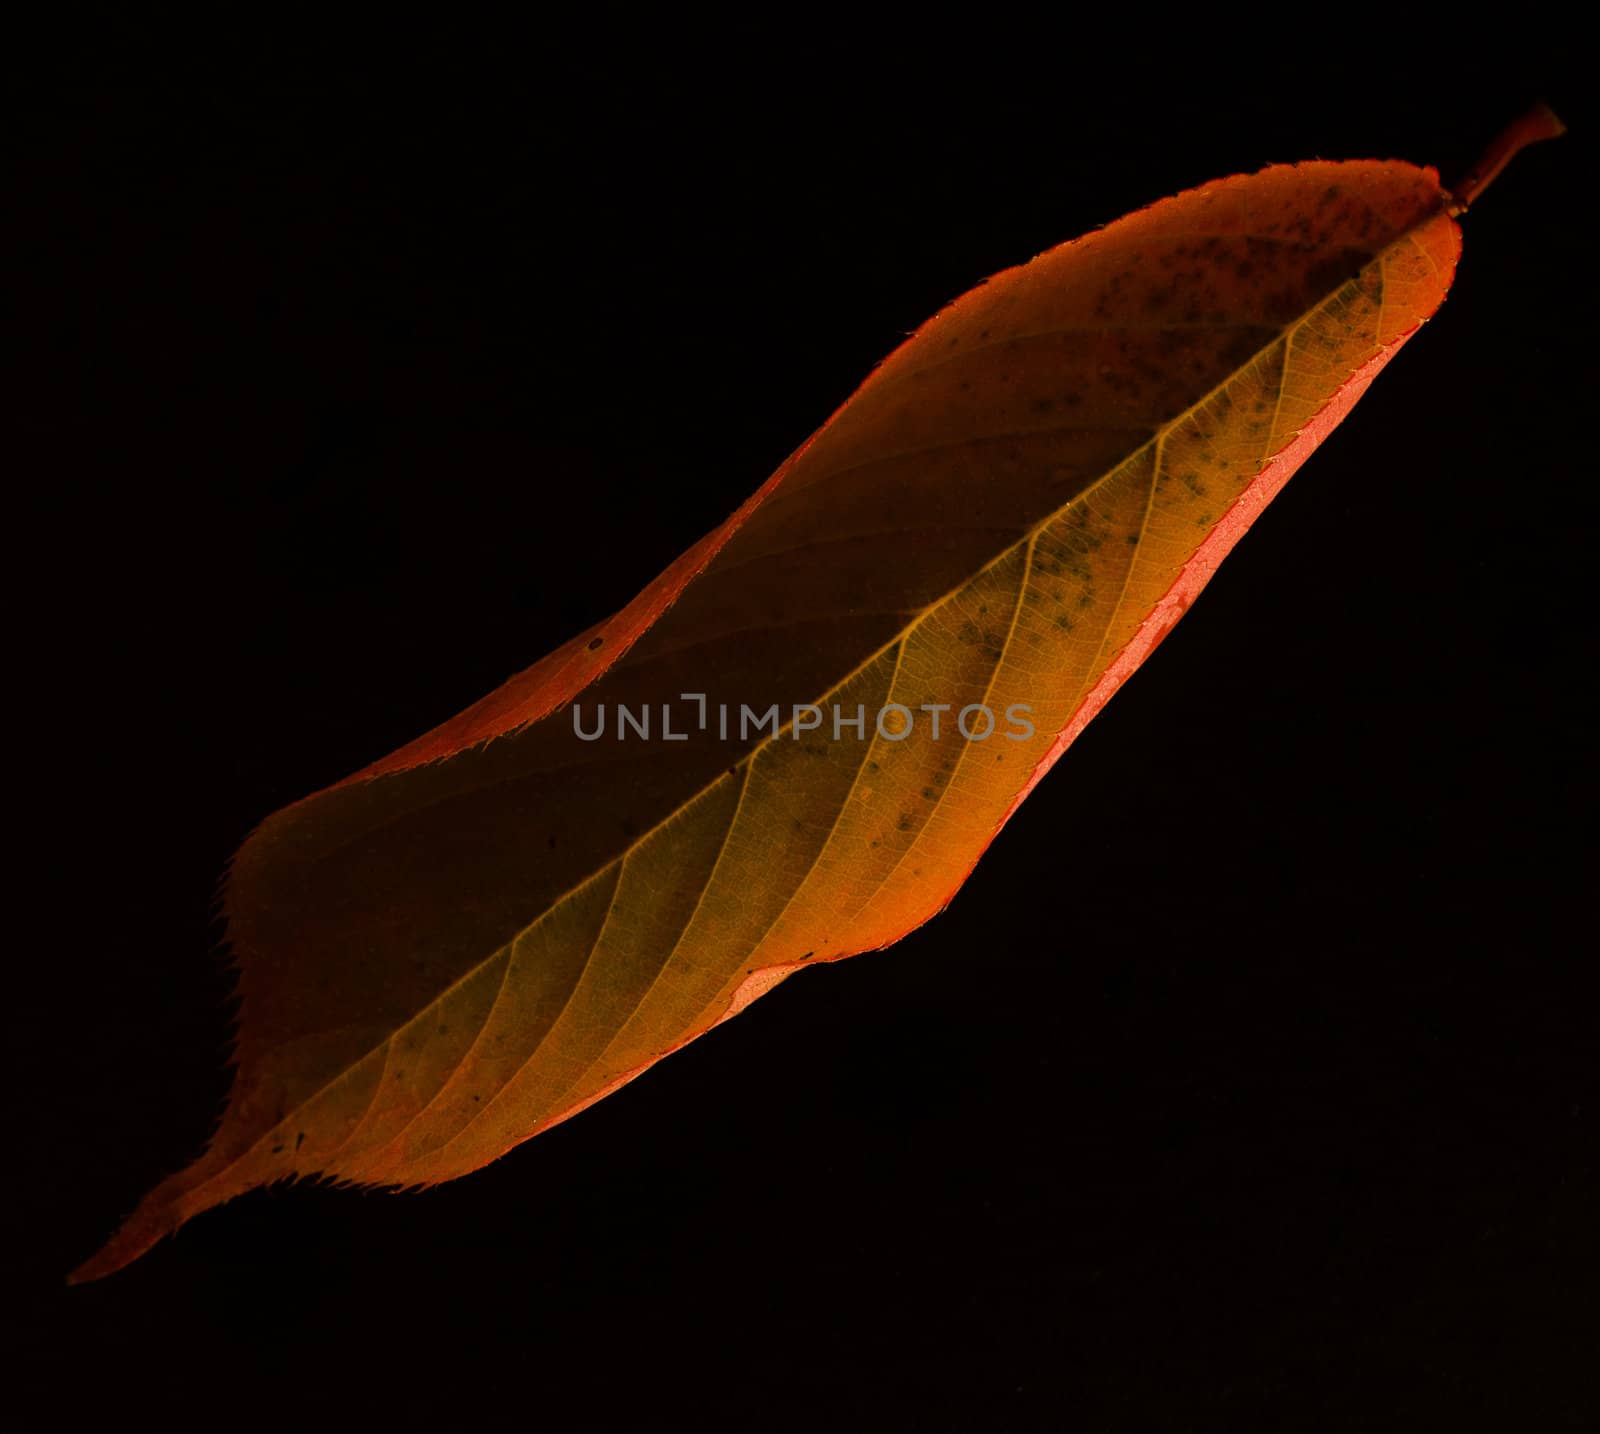 Studio lit fallen leaf.